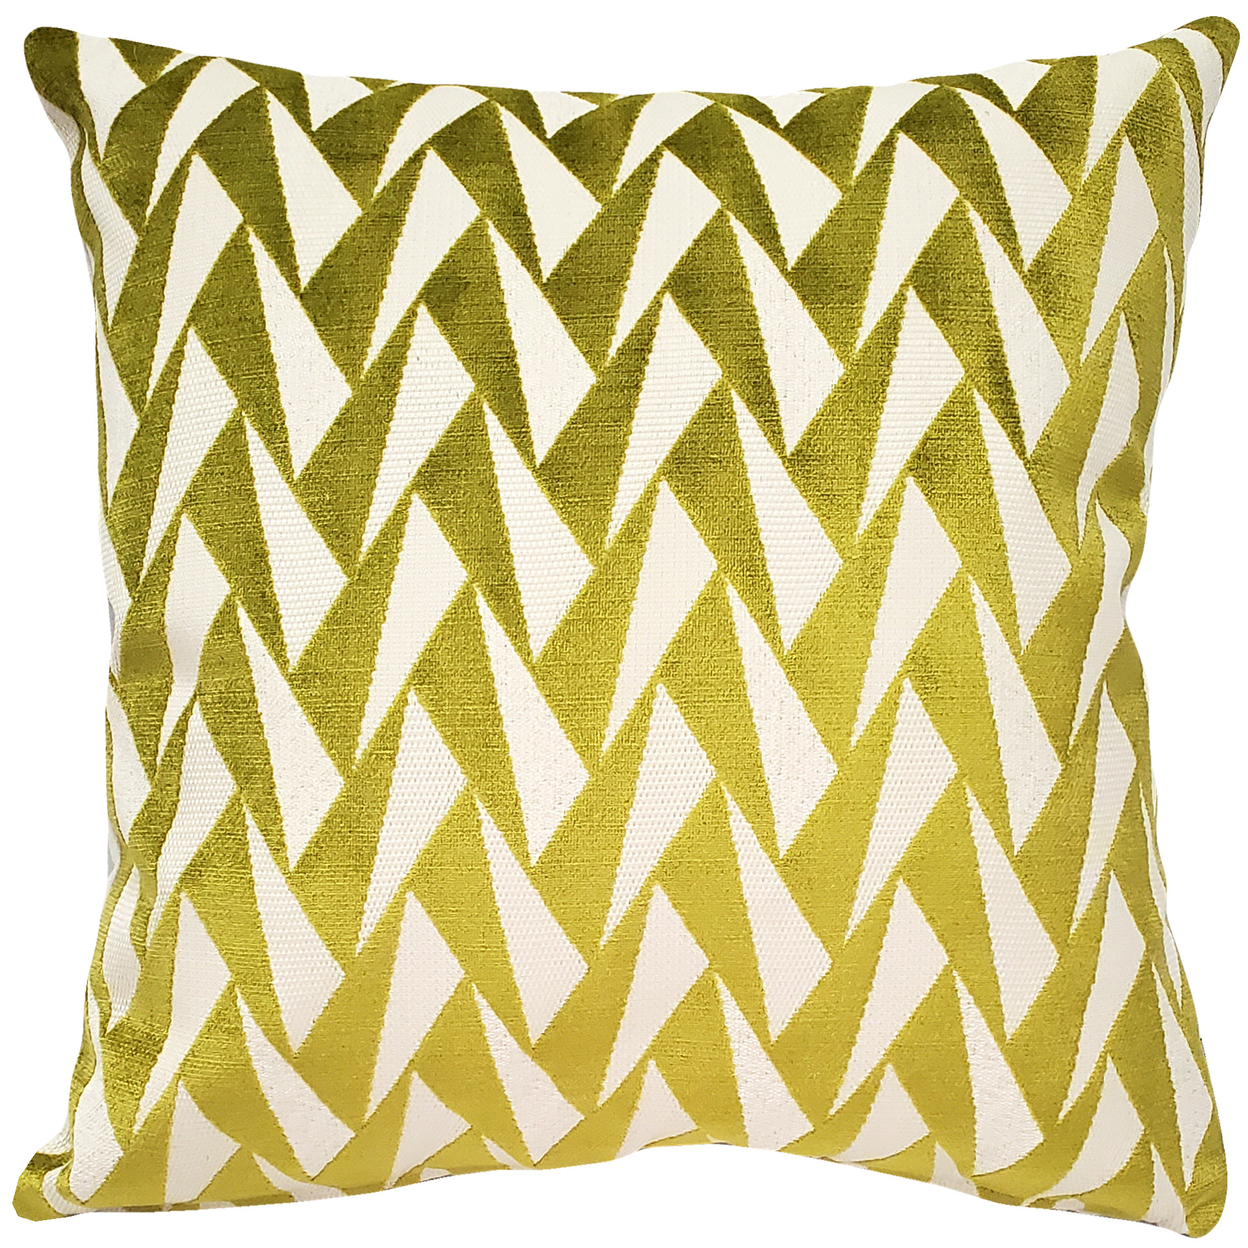 Nouveau Chartreuse Velvet Throw Pillow 19x19, With Polyfill Insert